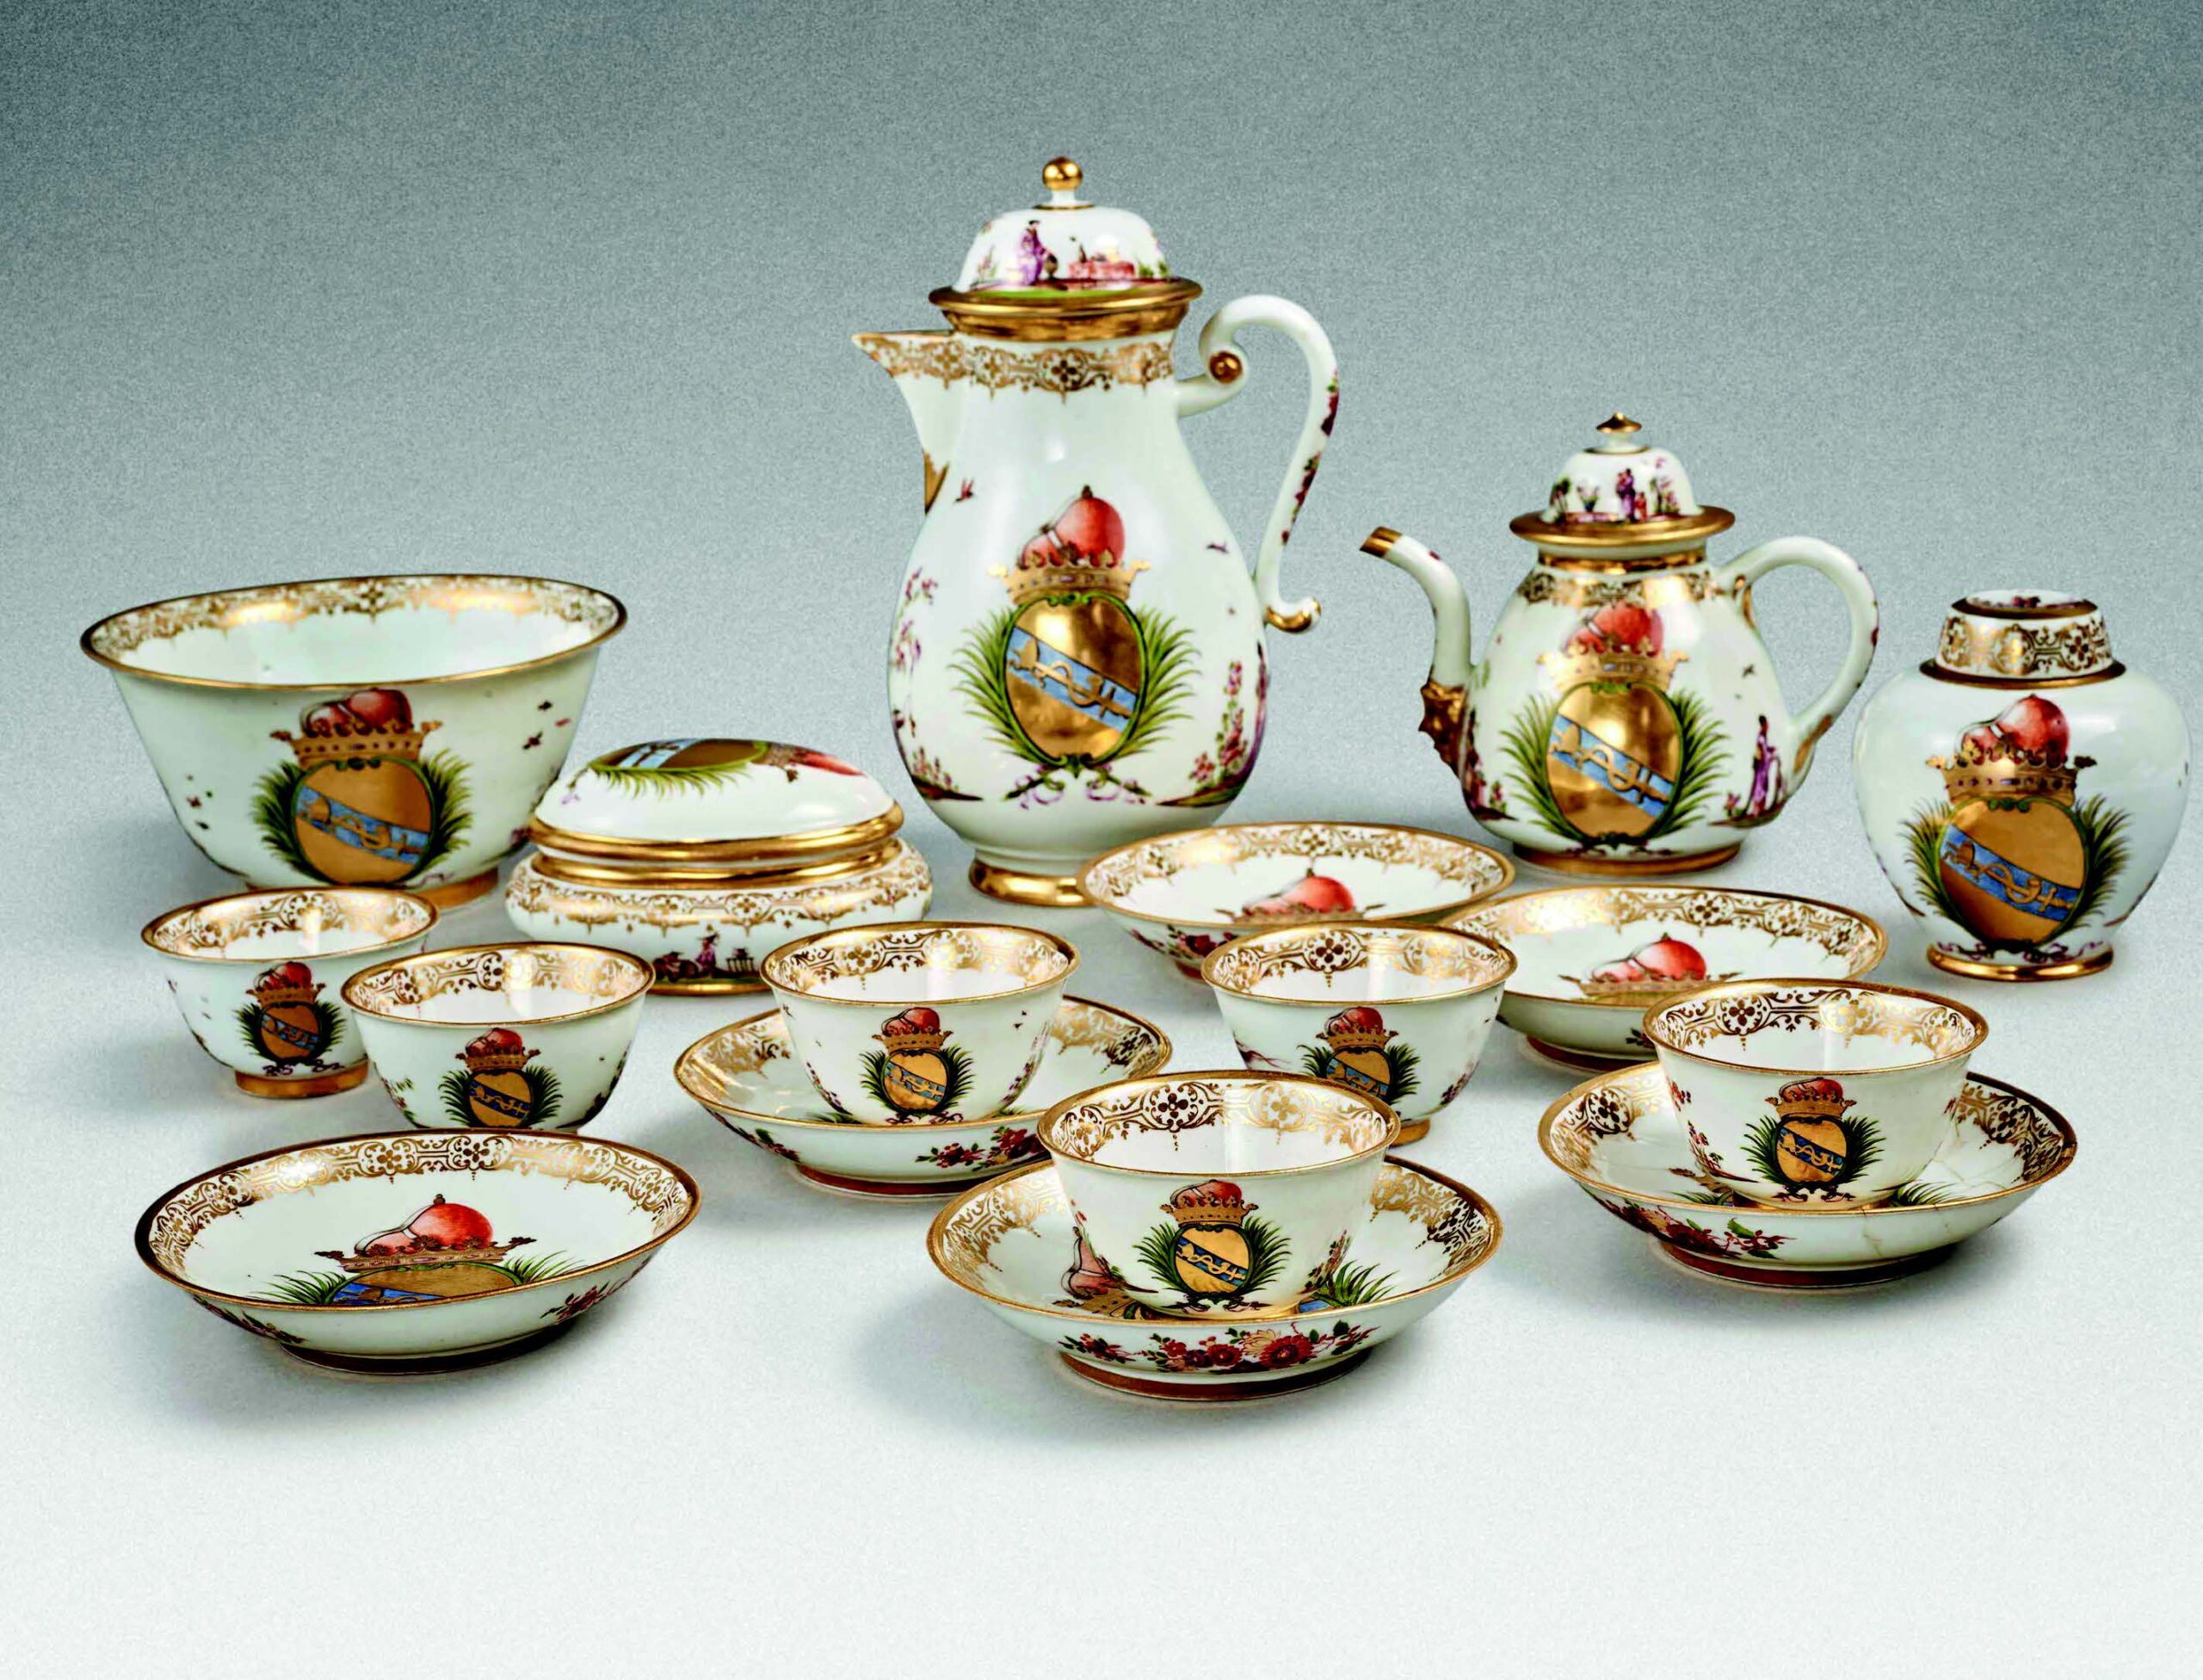 Meissen porcelain once stolen by the Nazis